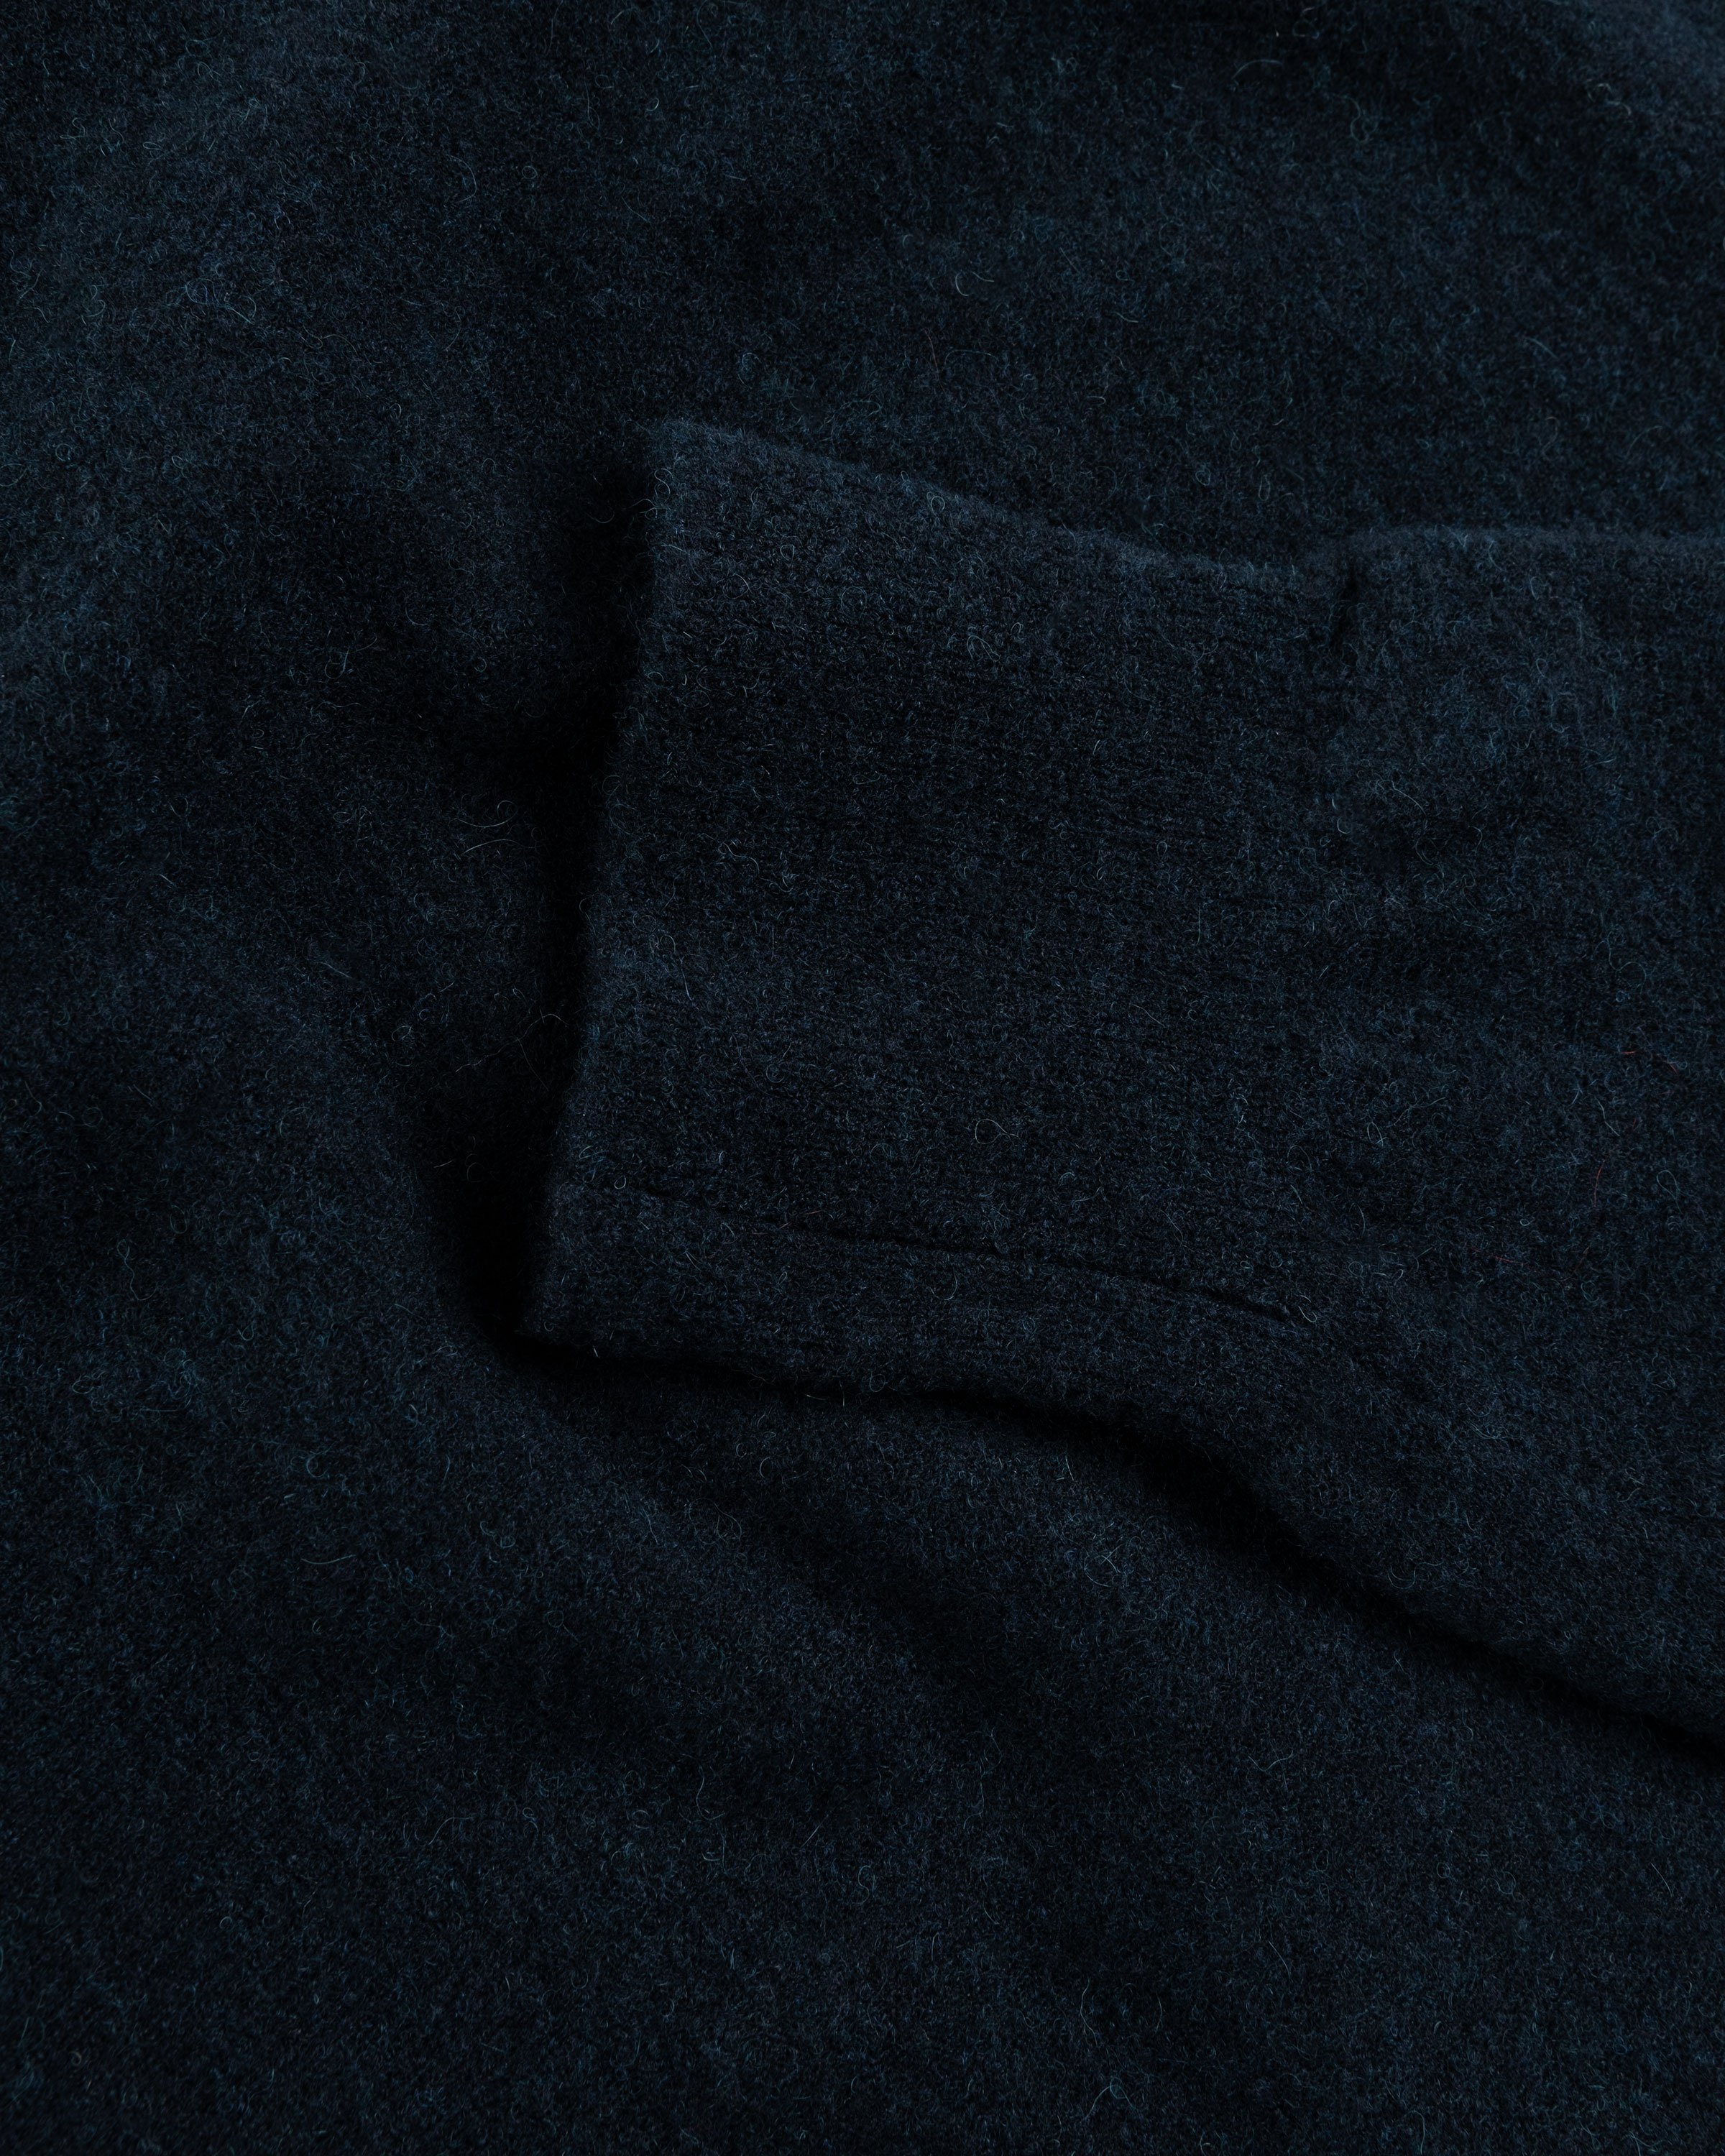 Acne Studios - Embroidered Logo Crewneck Dark Navy Melange - Clothing - Blue - Image 5